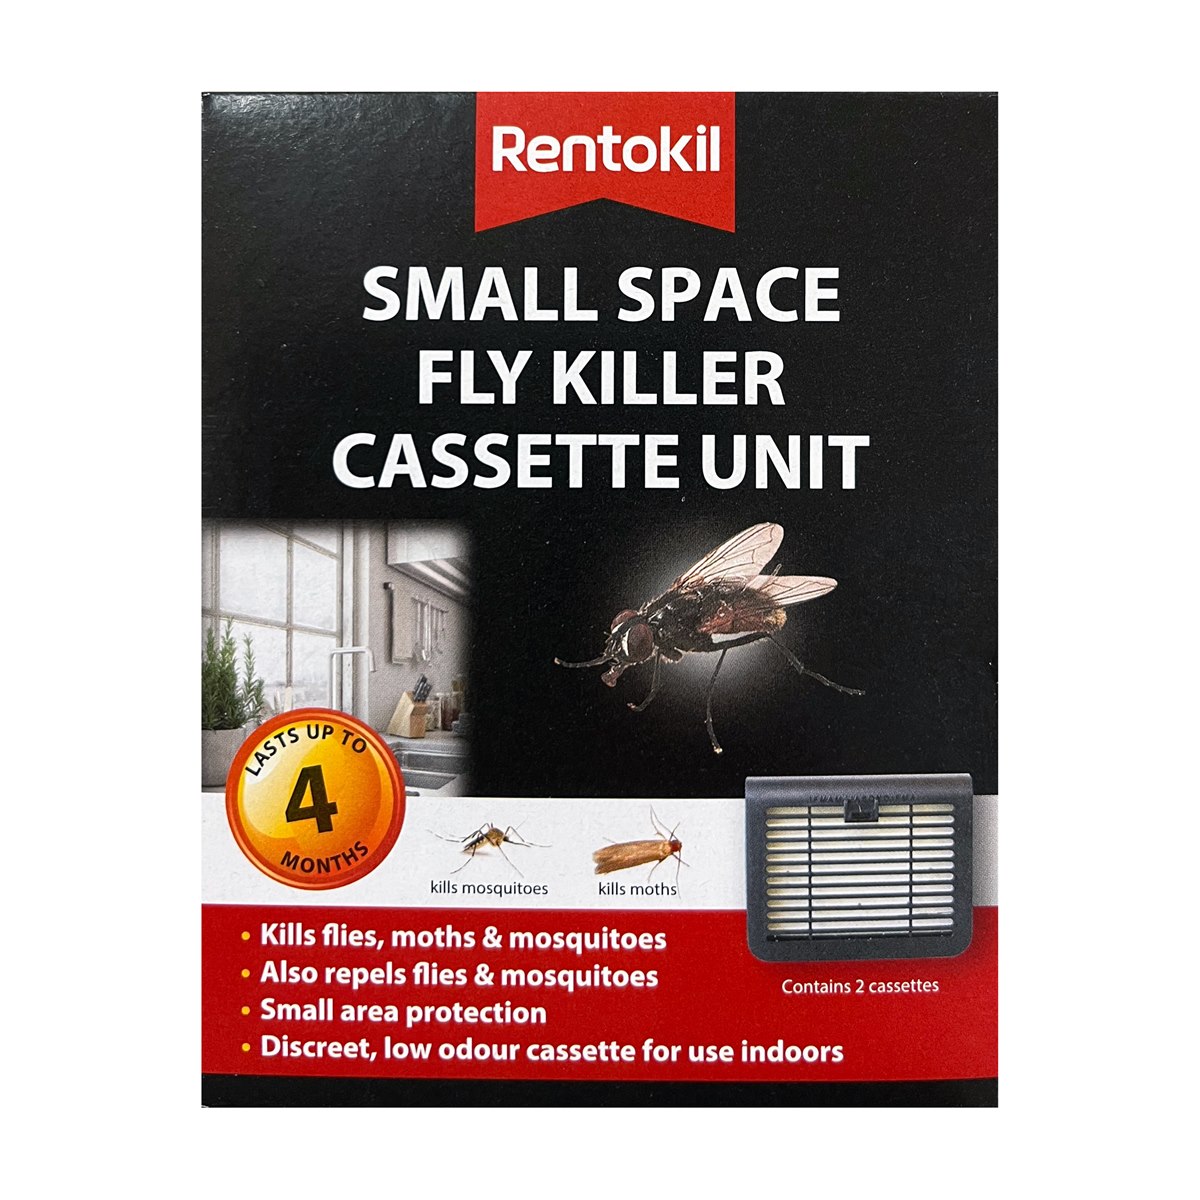 Rentokil Small Space Fly Killer Cassette Unit